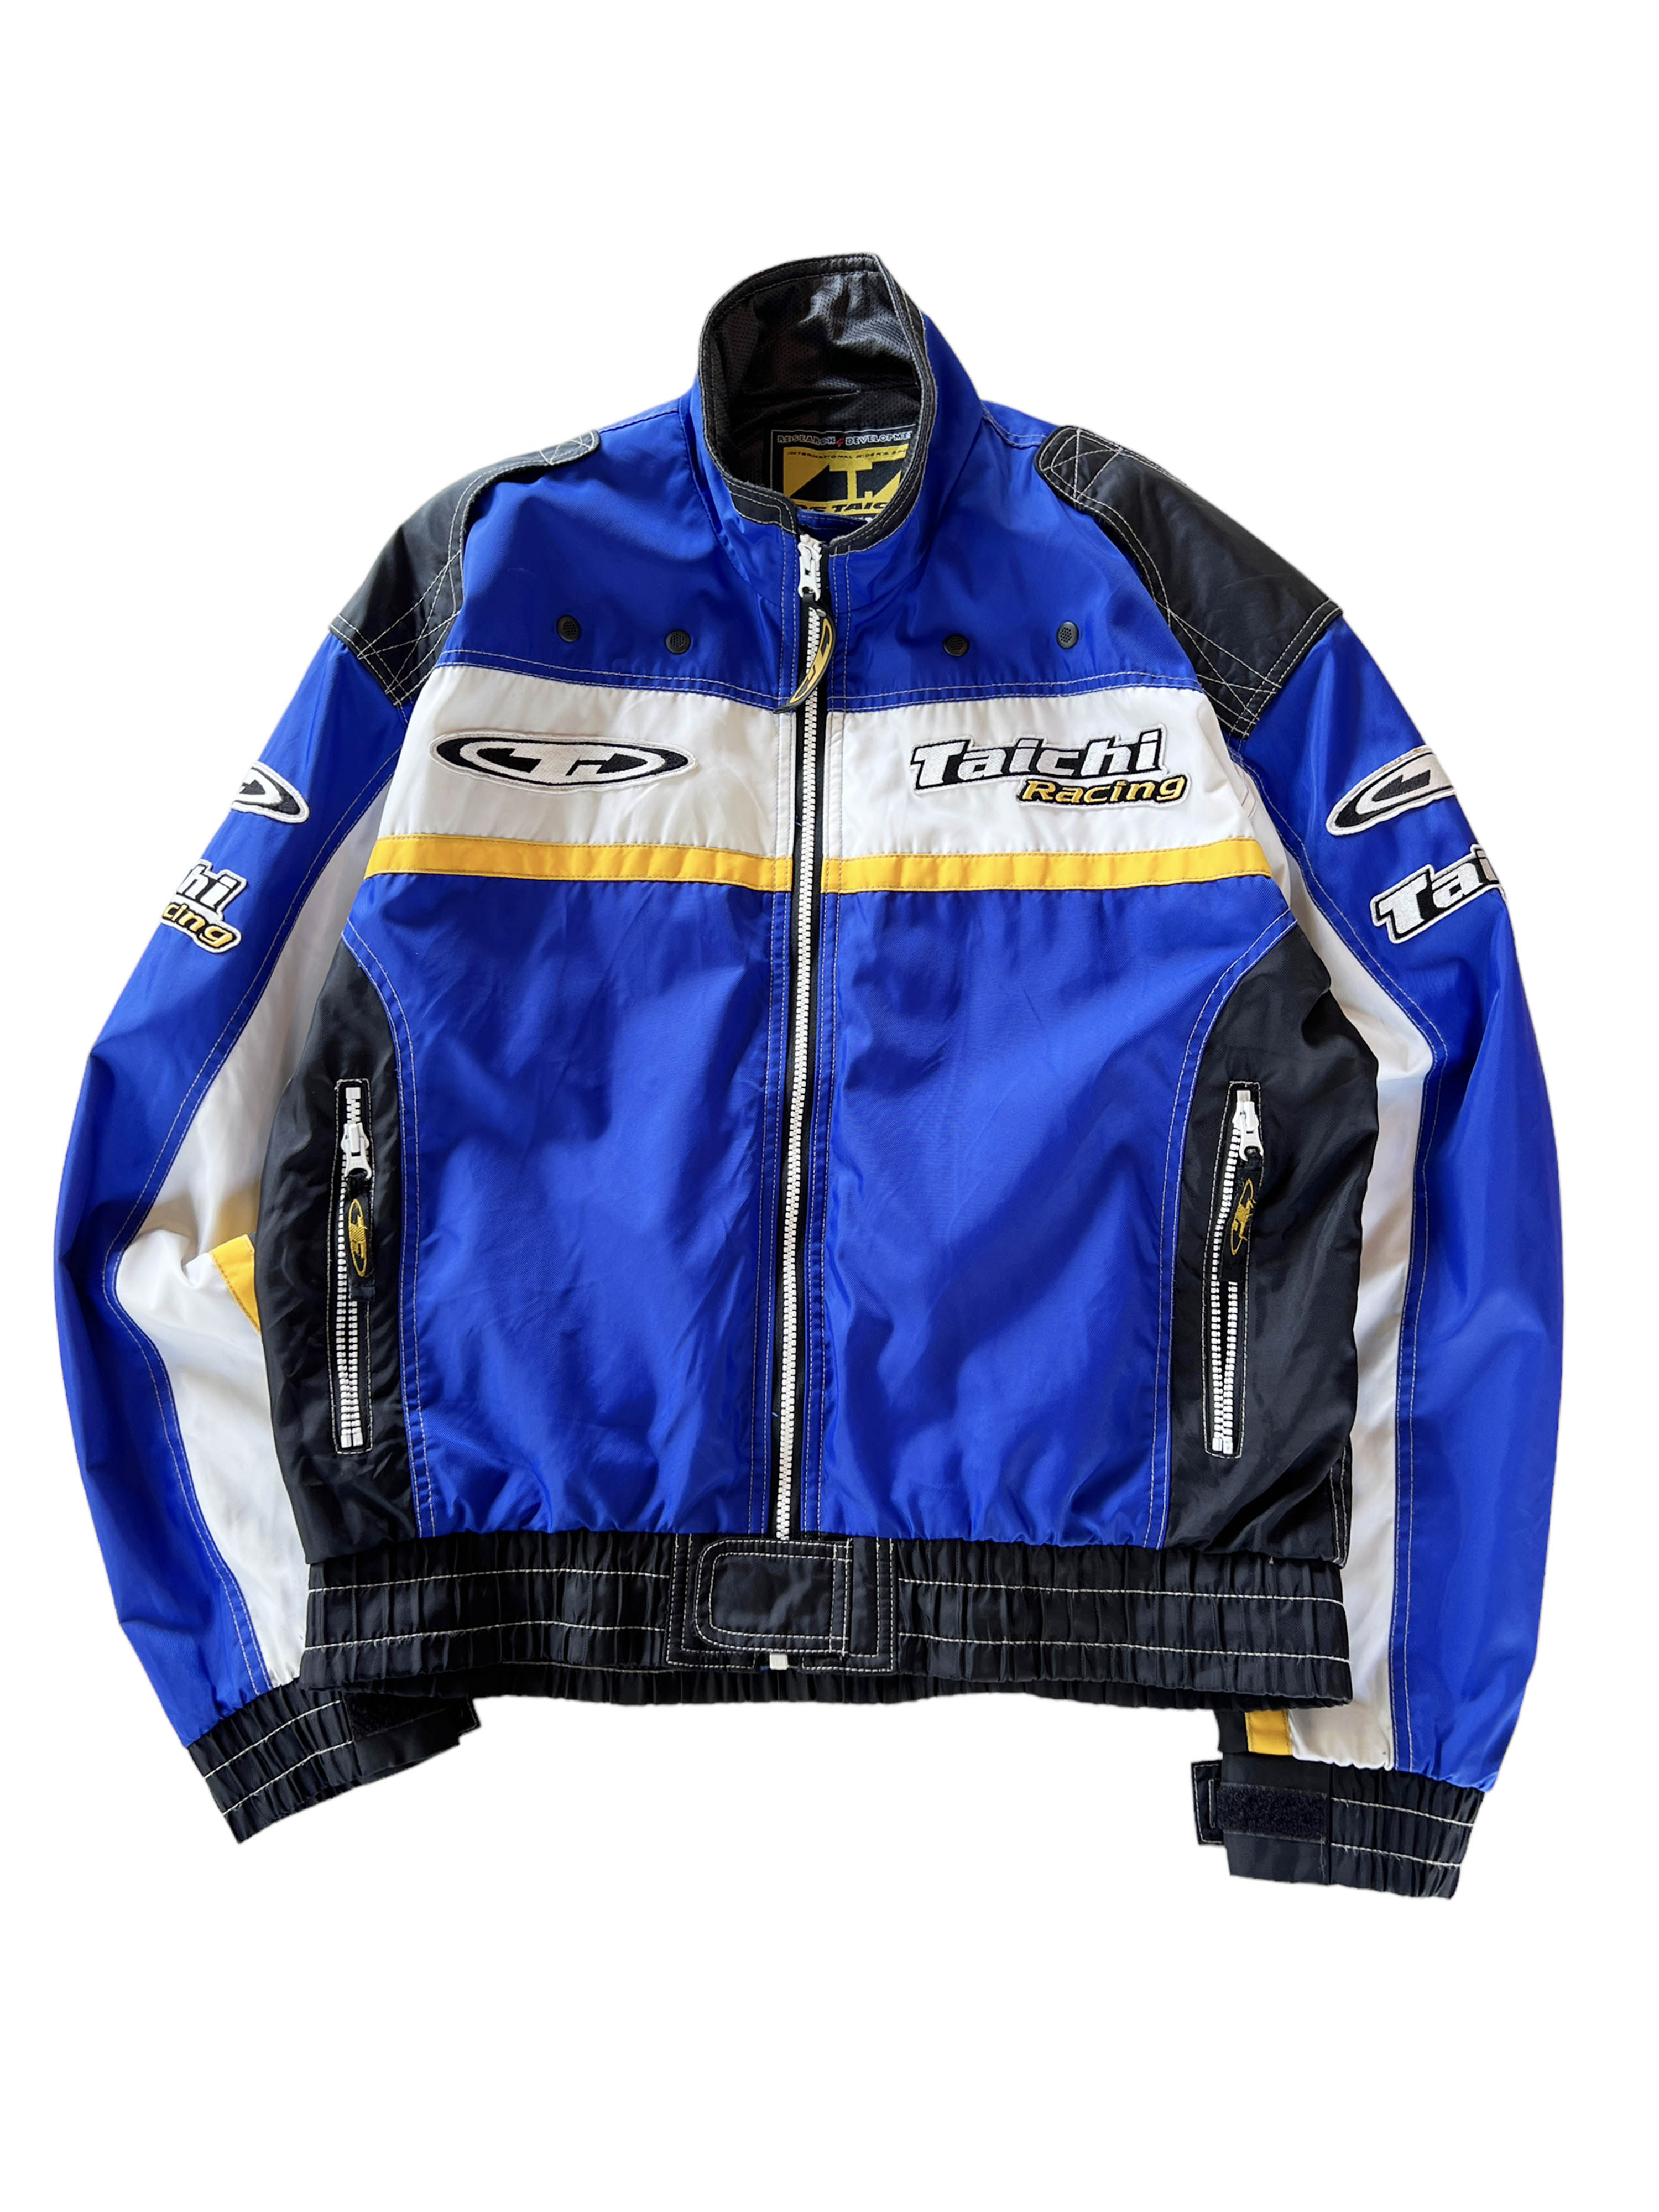 Taichi racing jacket